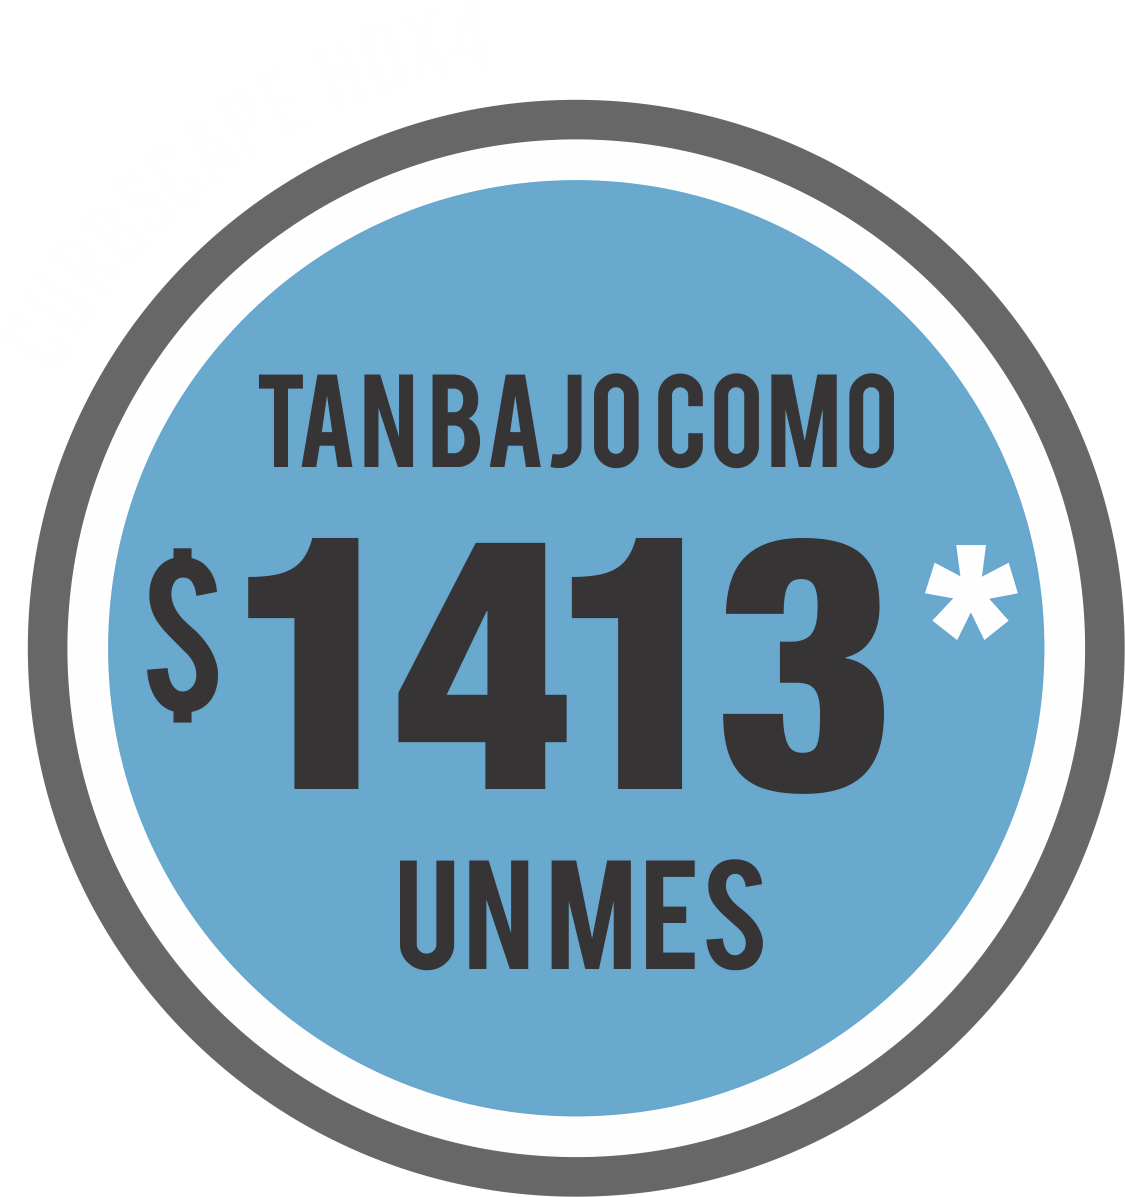 CurbScape HDX4 tanbajocomo $1413 unmes